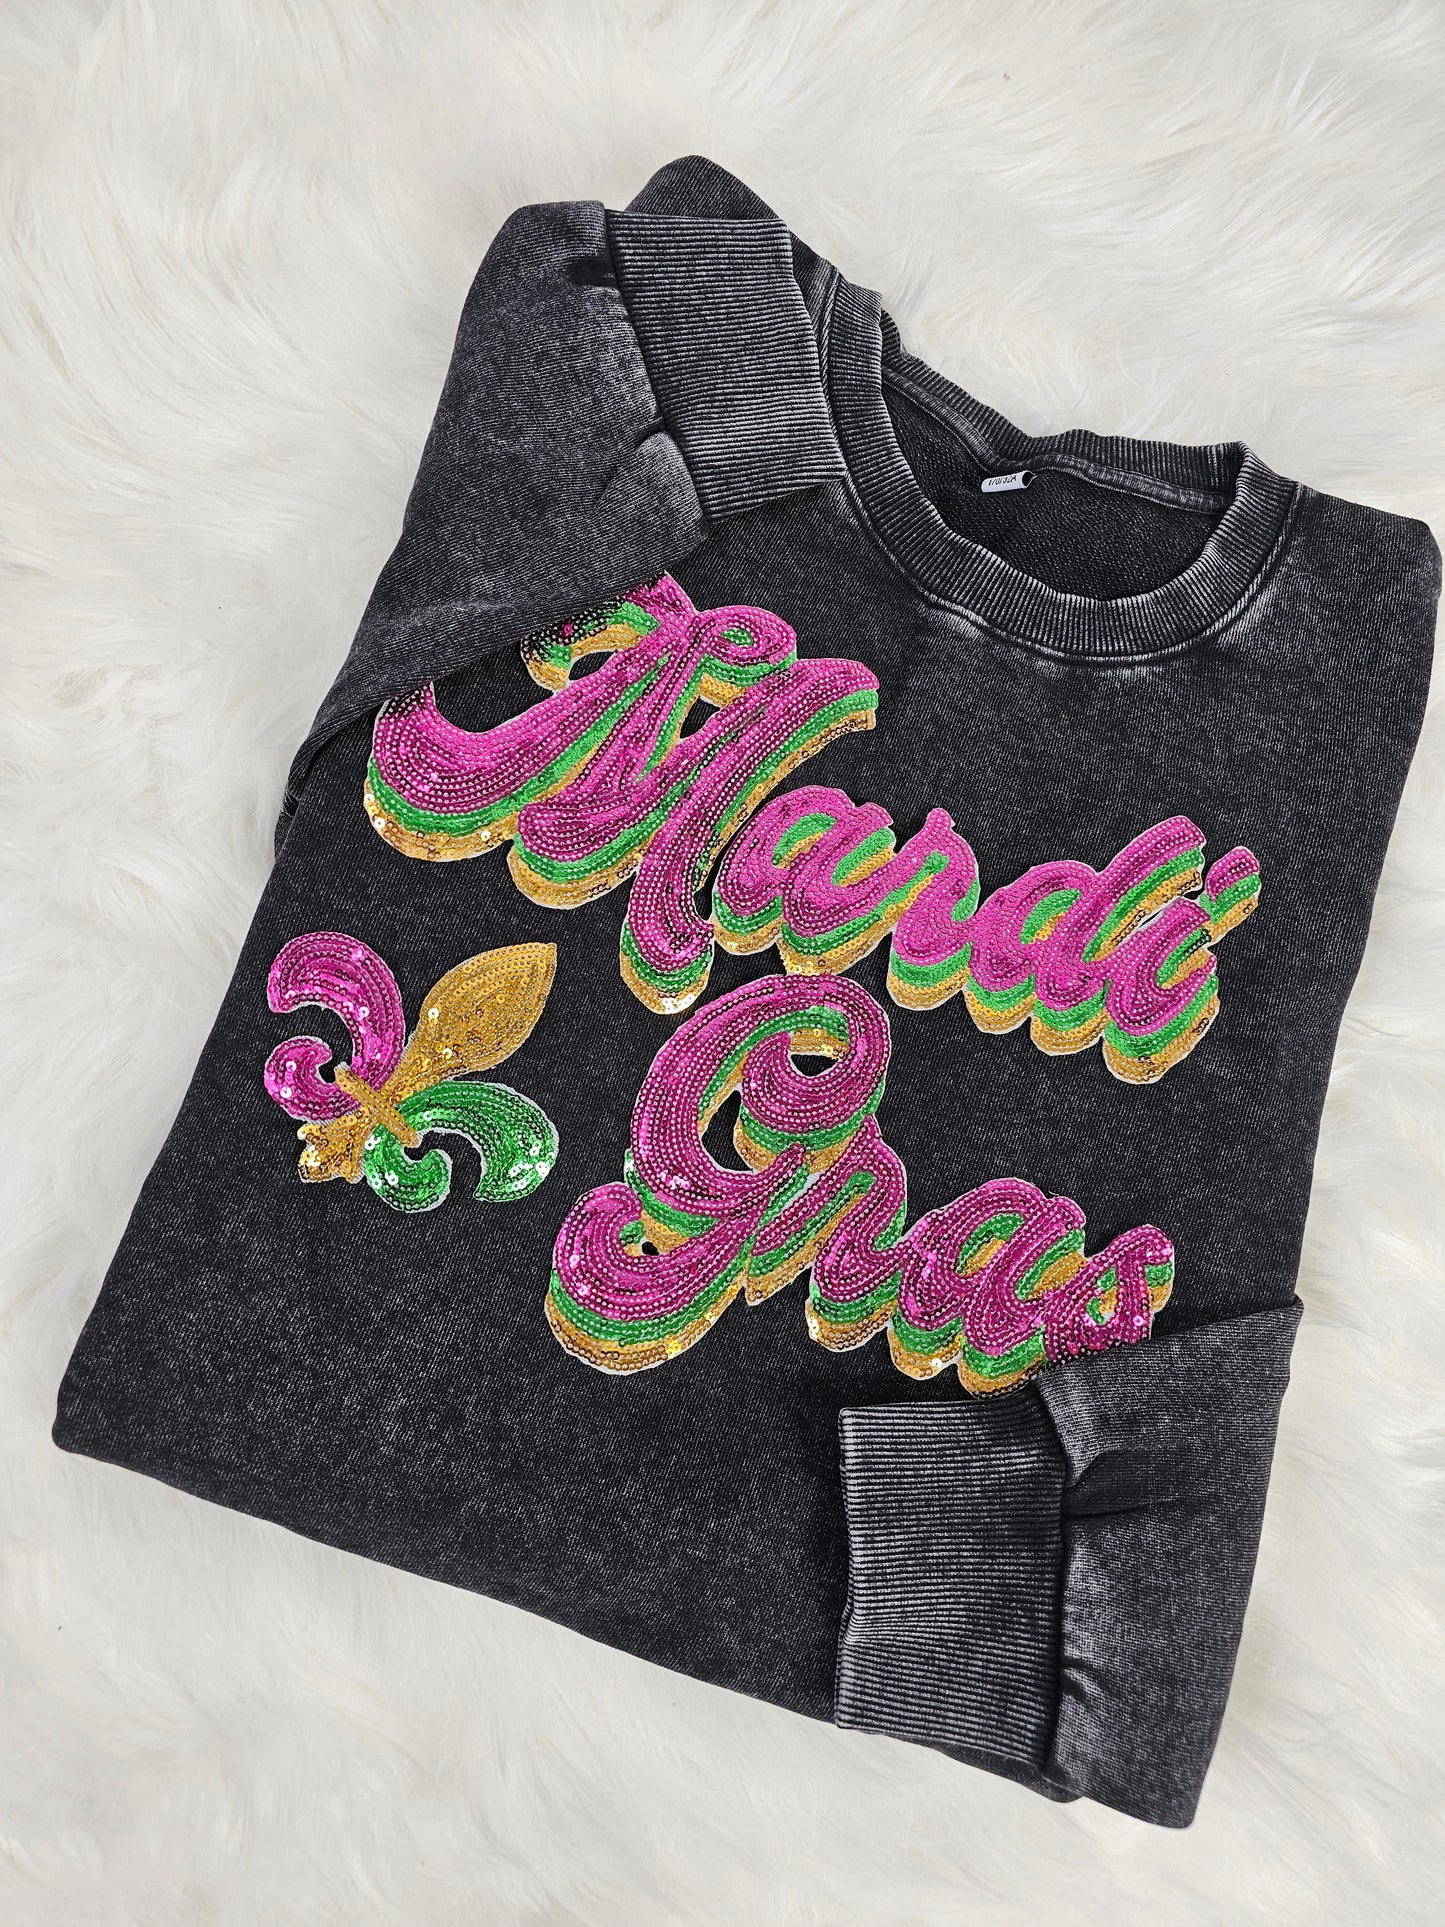 Mardi Gras With Fleur-De-Lis Sequin Acid Wash Black Crew by Pretty Preppy Co.